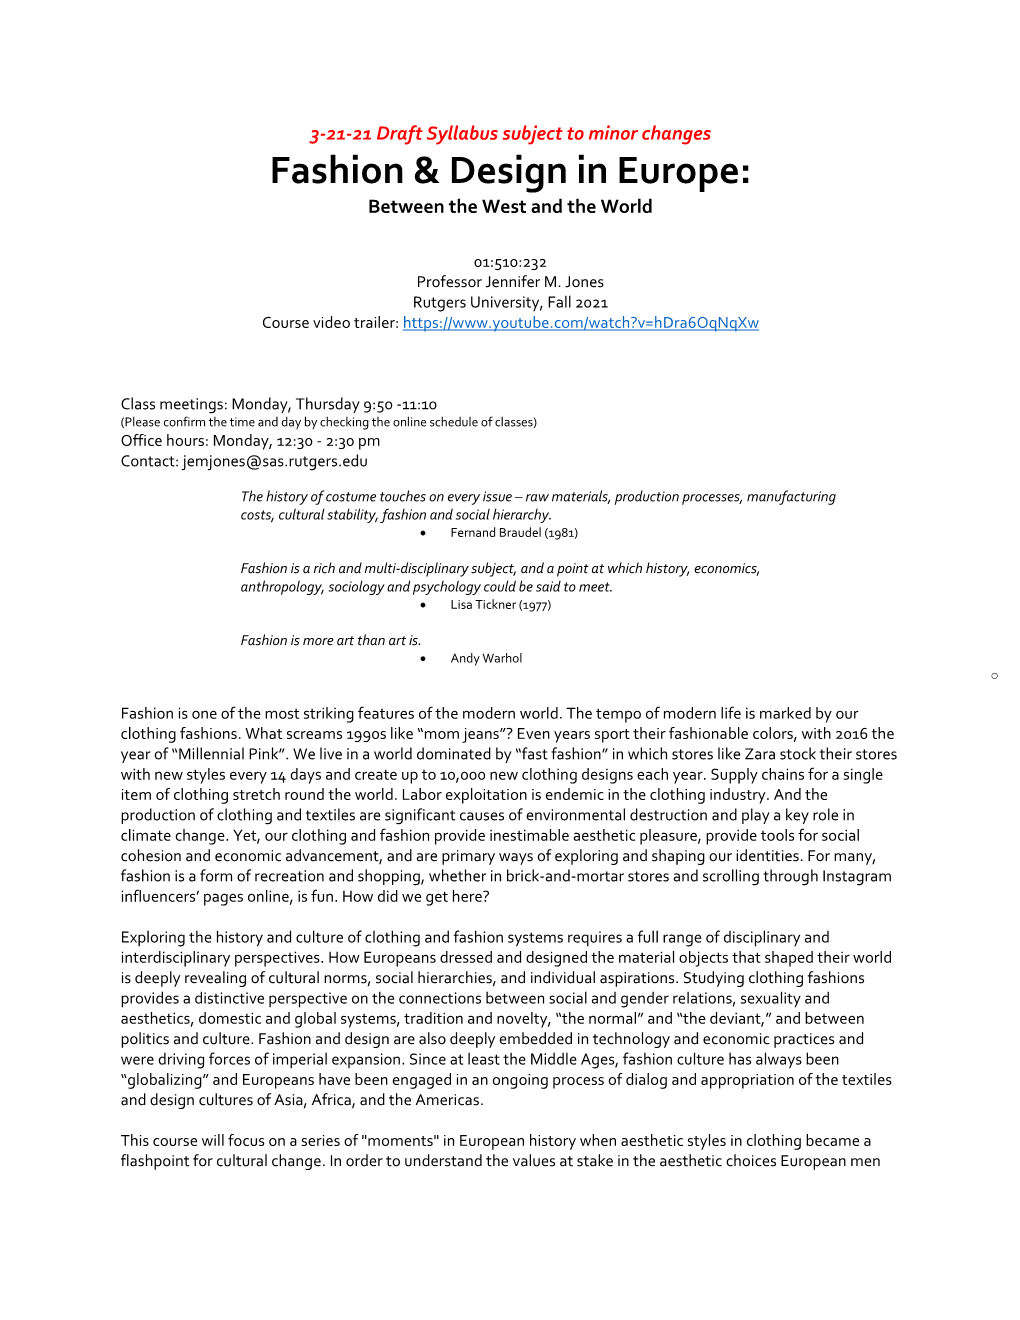 Fashion & Design in Europe